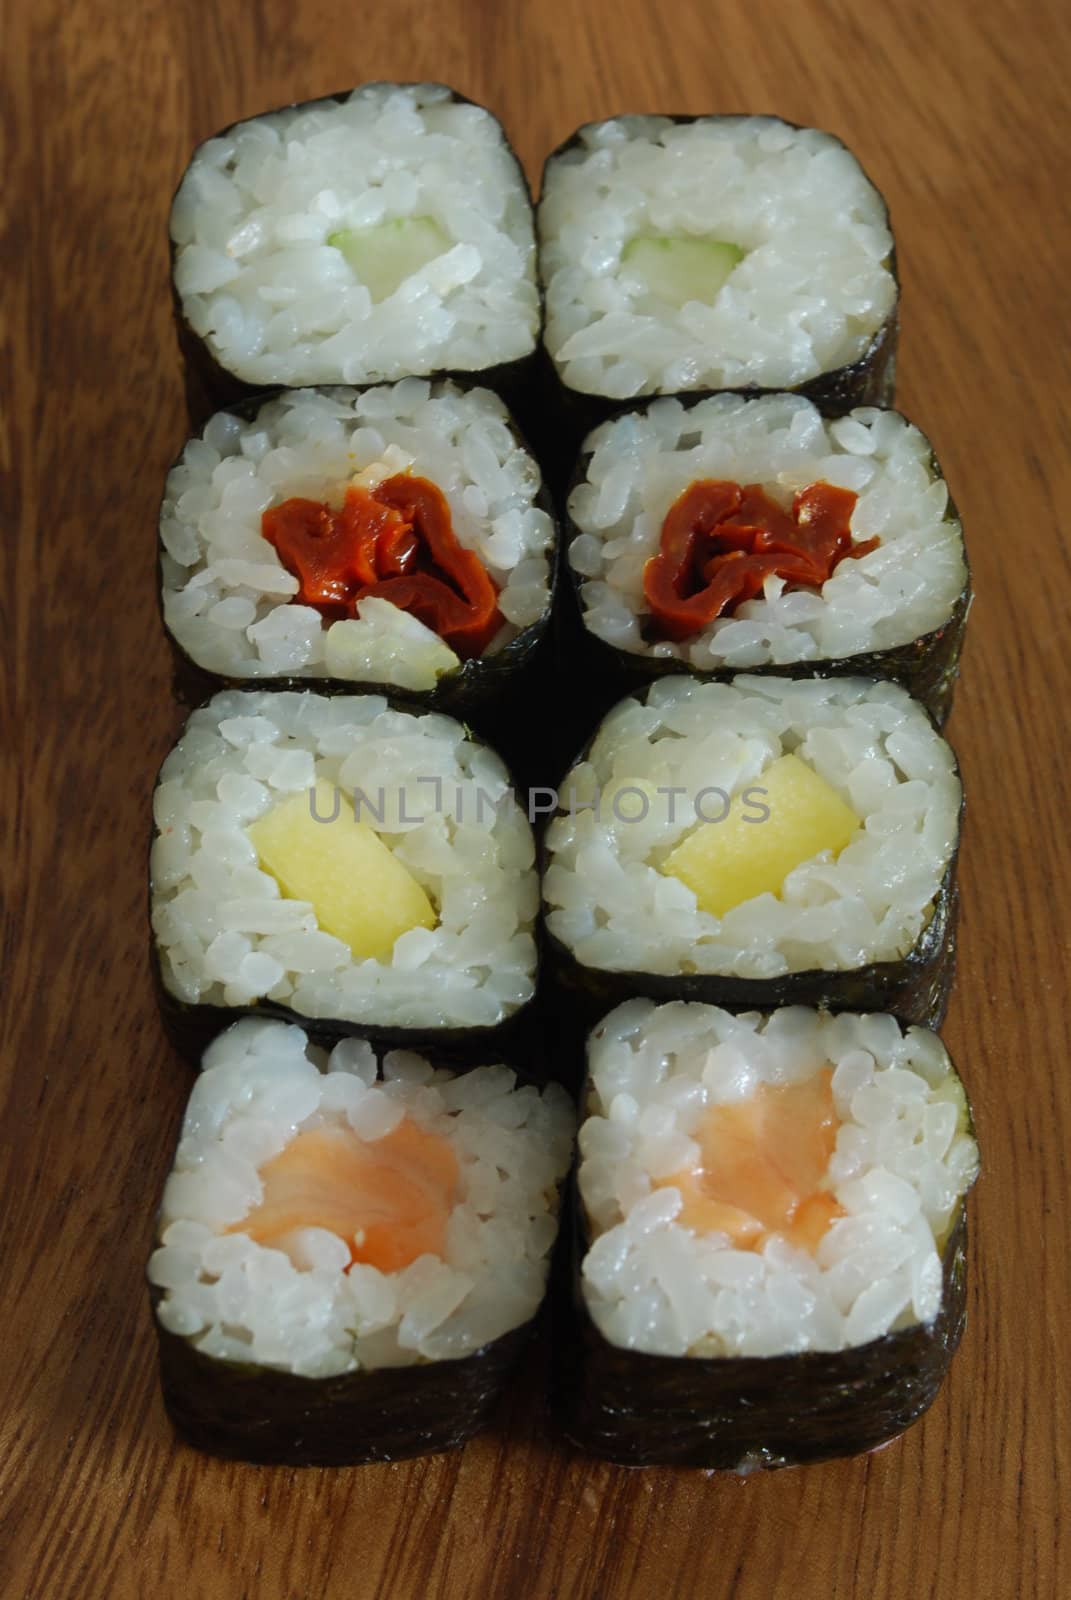 high quality photo of sushi meal (hossomaki salmon)